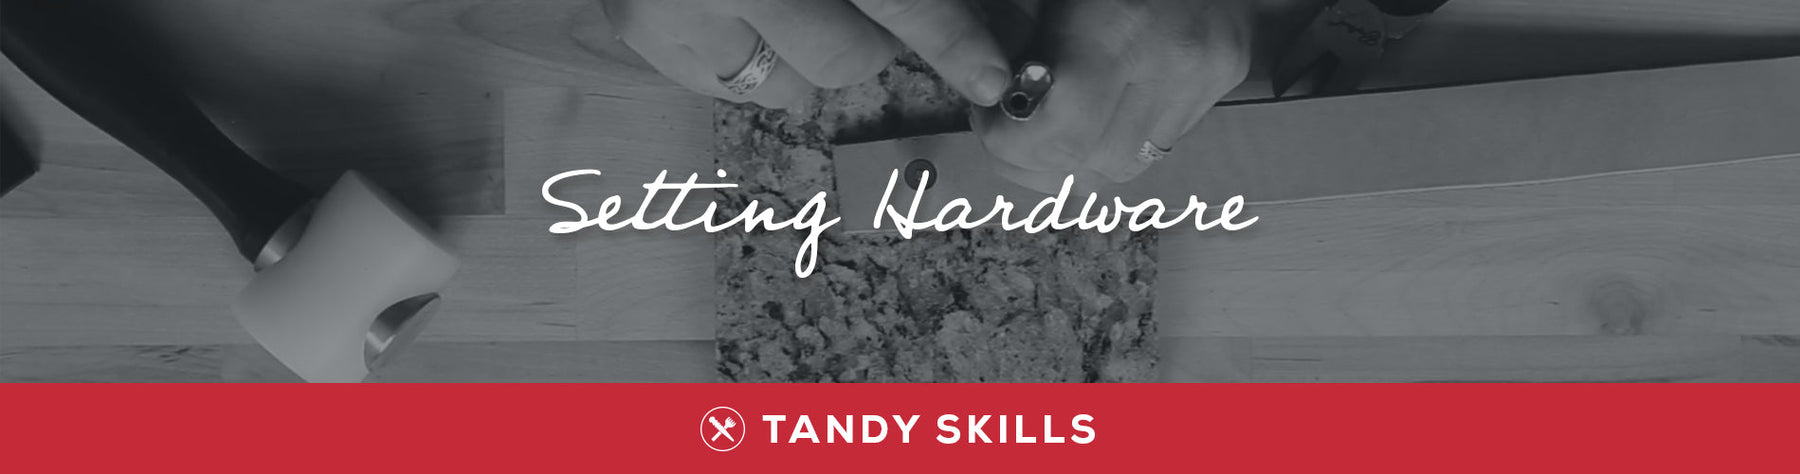 Tandy Skills: Setting Hardware